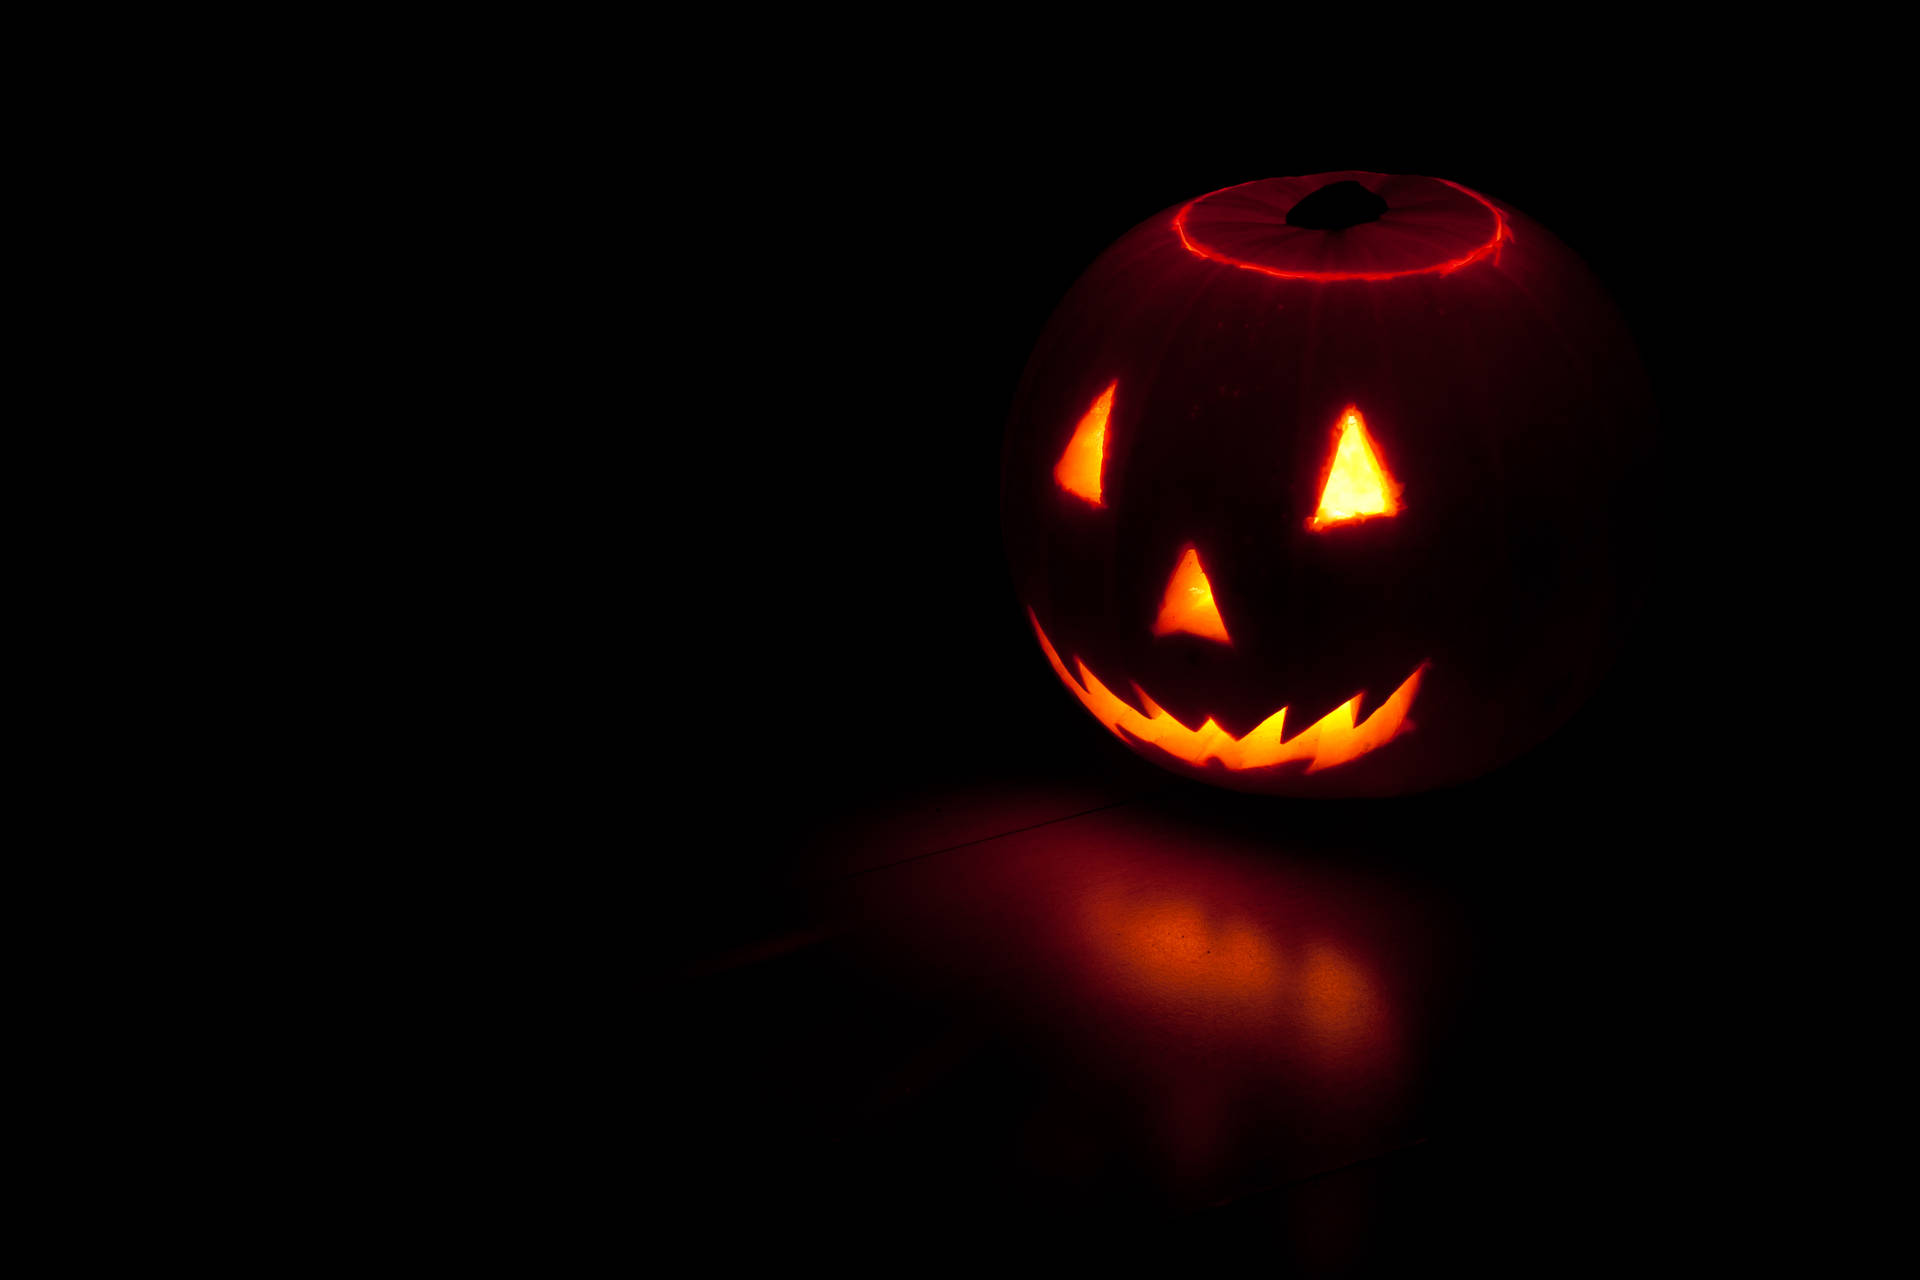 Smiling Pumpkin On Halloween Background